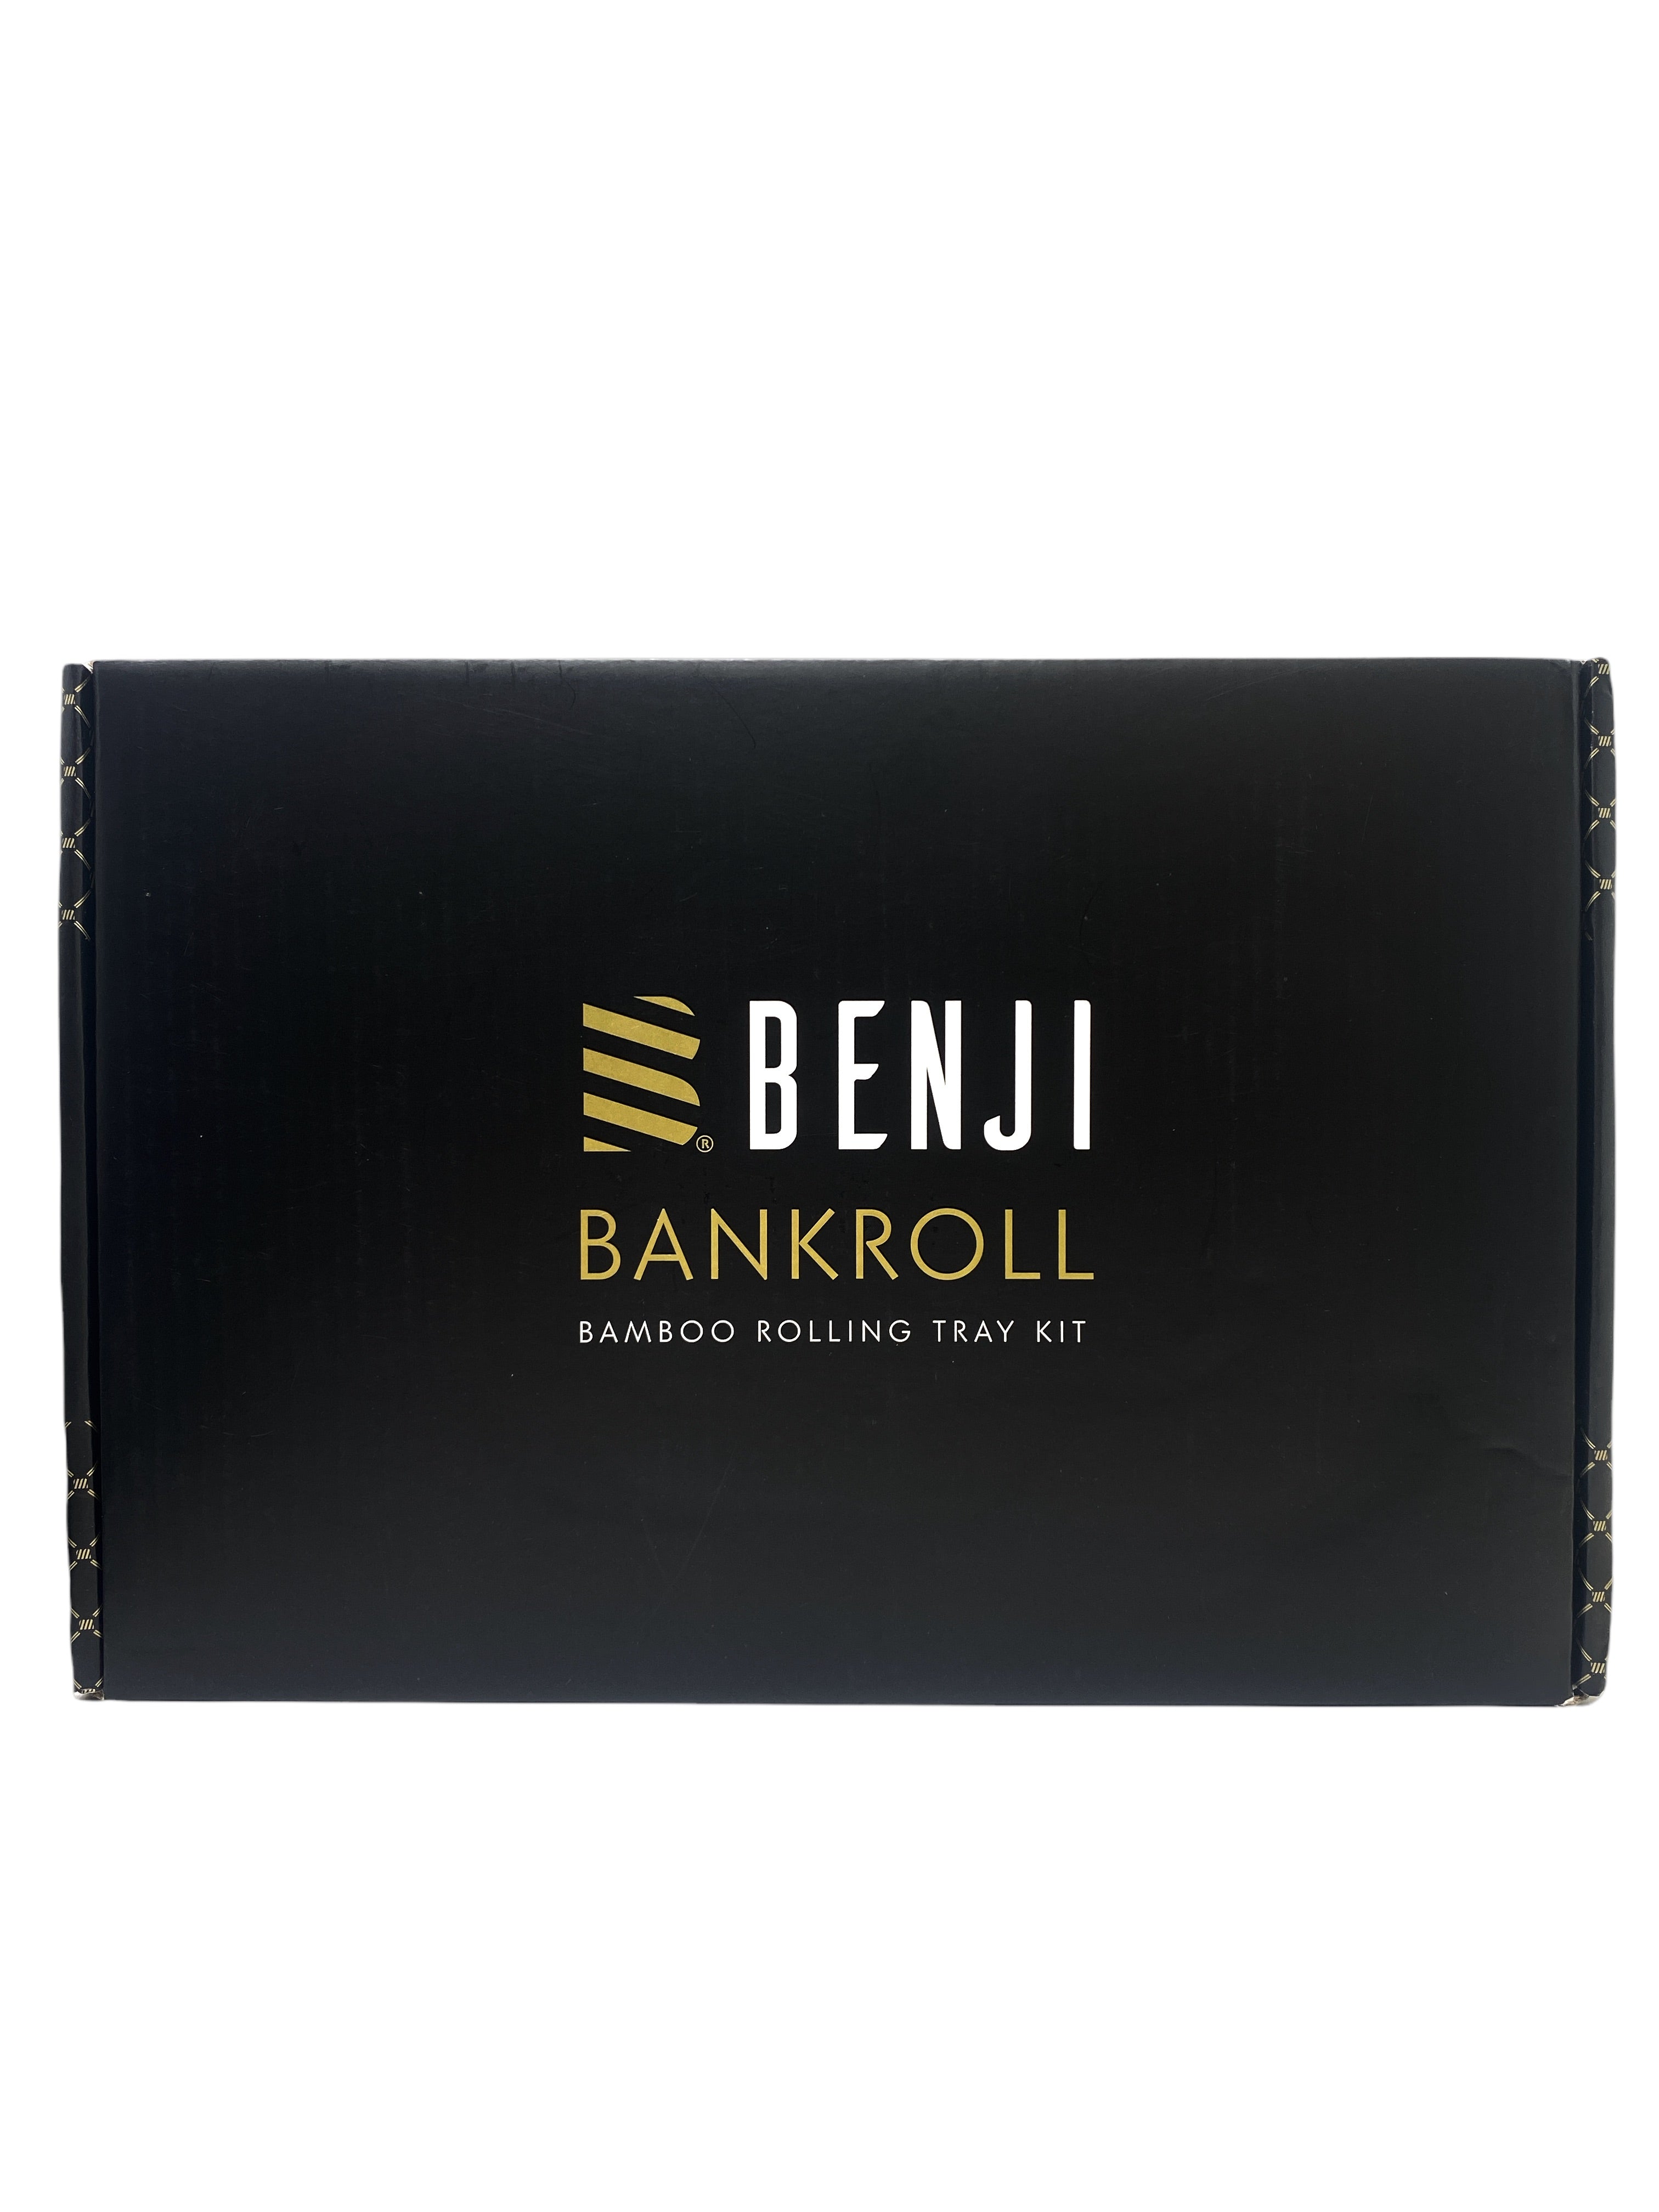 Benji Bankroll Rolling Tray